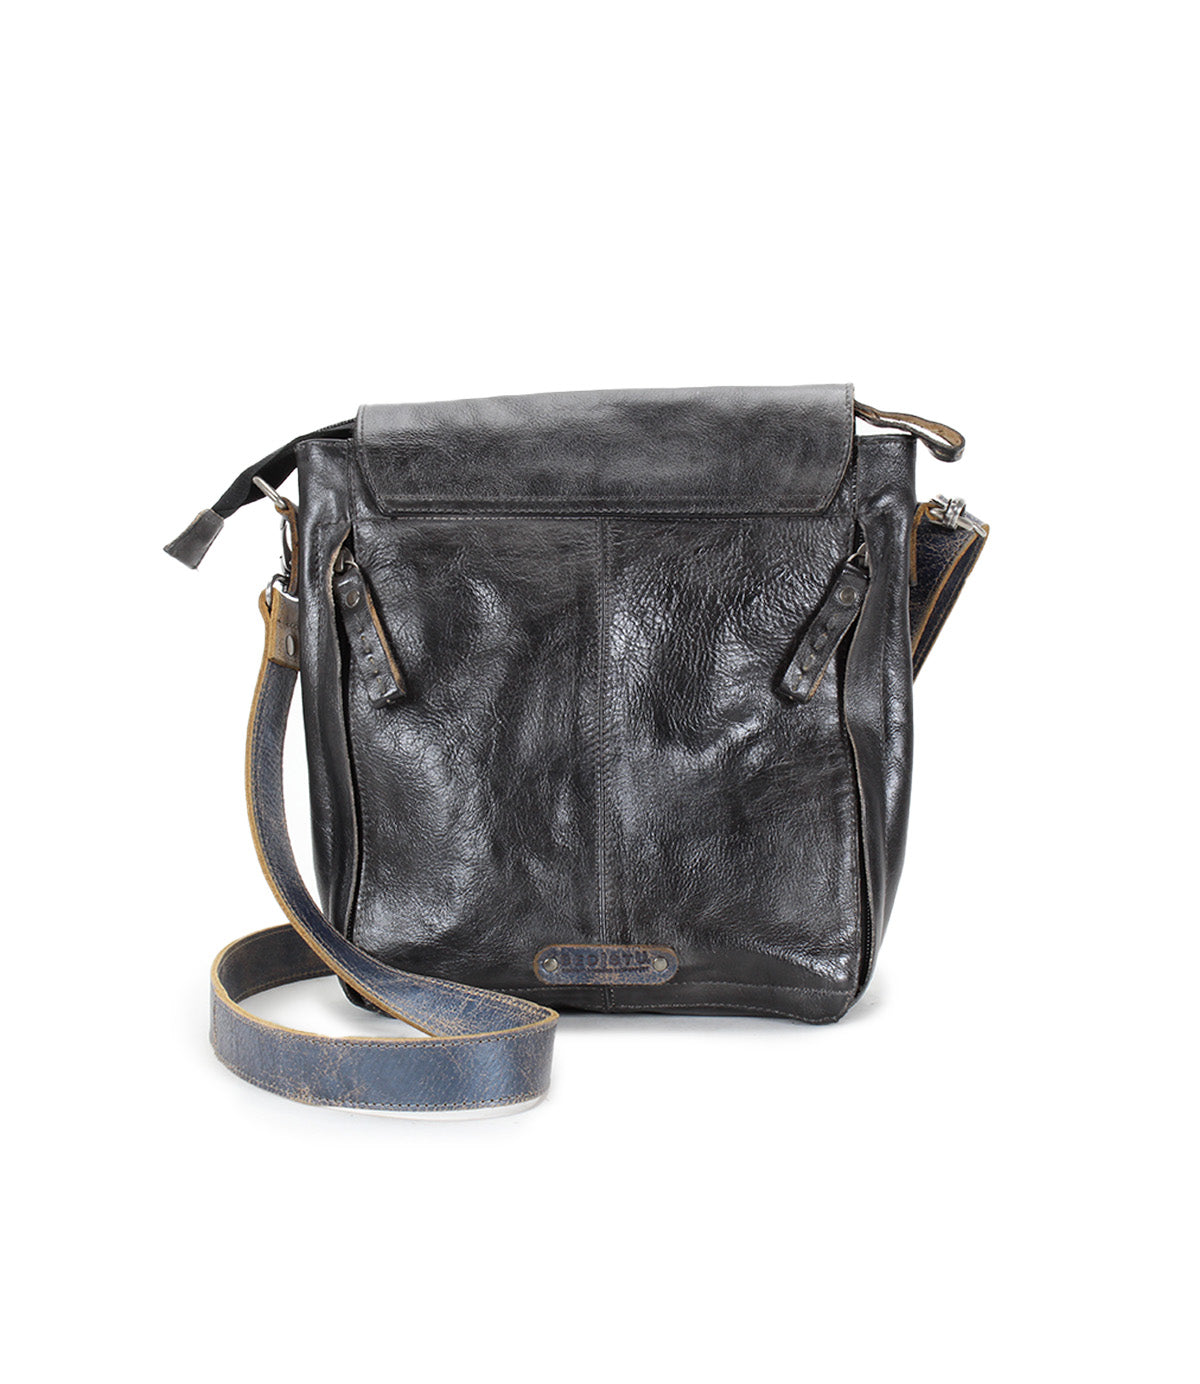 A black leather crossbody handbag with an adjustable strap, the Ainhoa by Bed Stu.